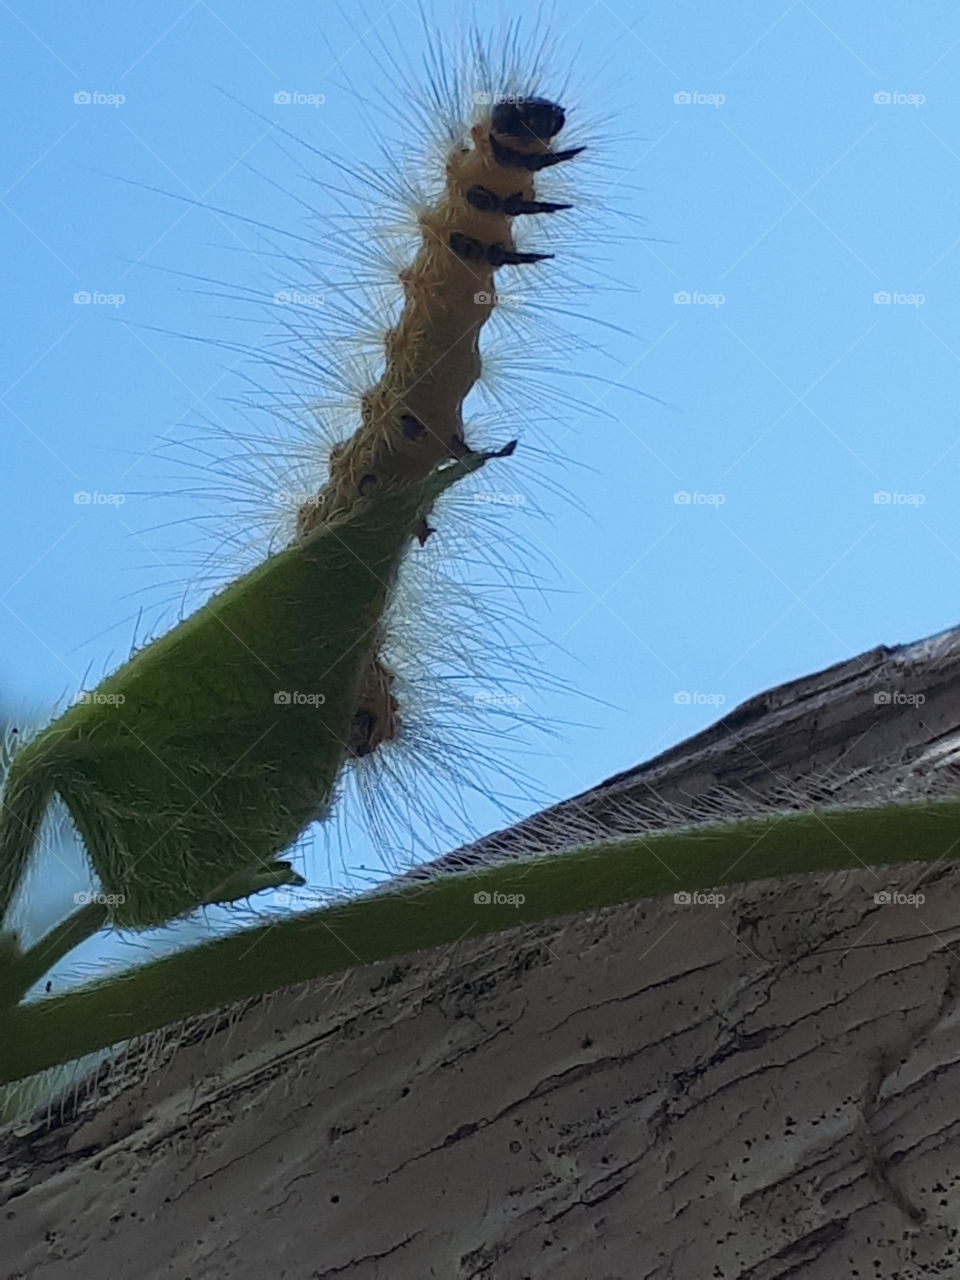 catetpillar